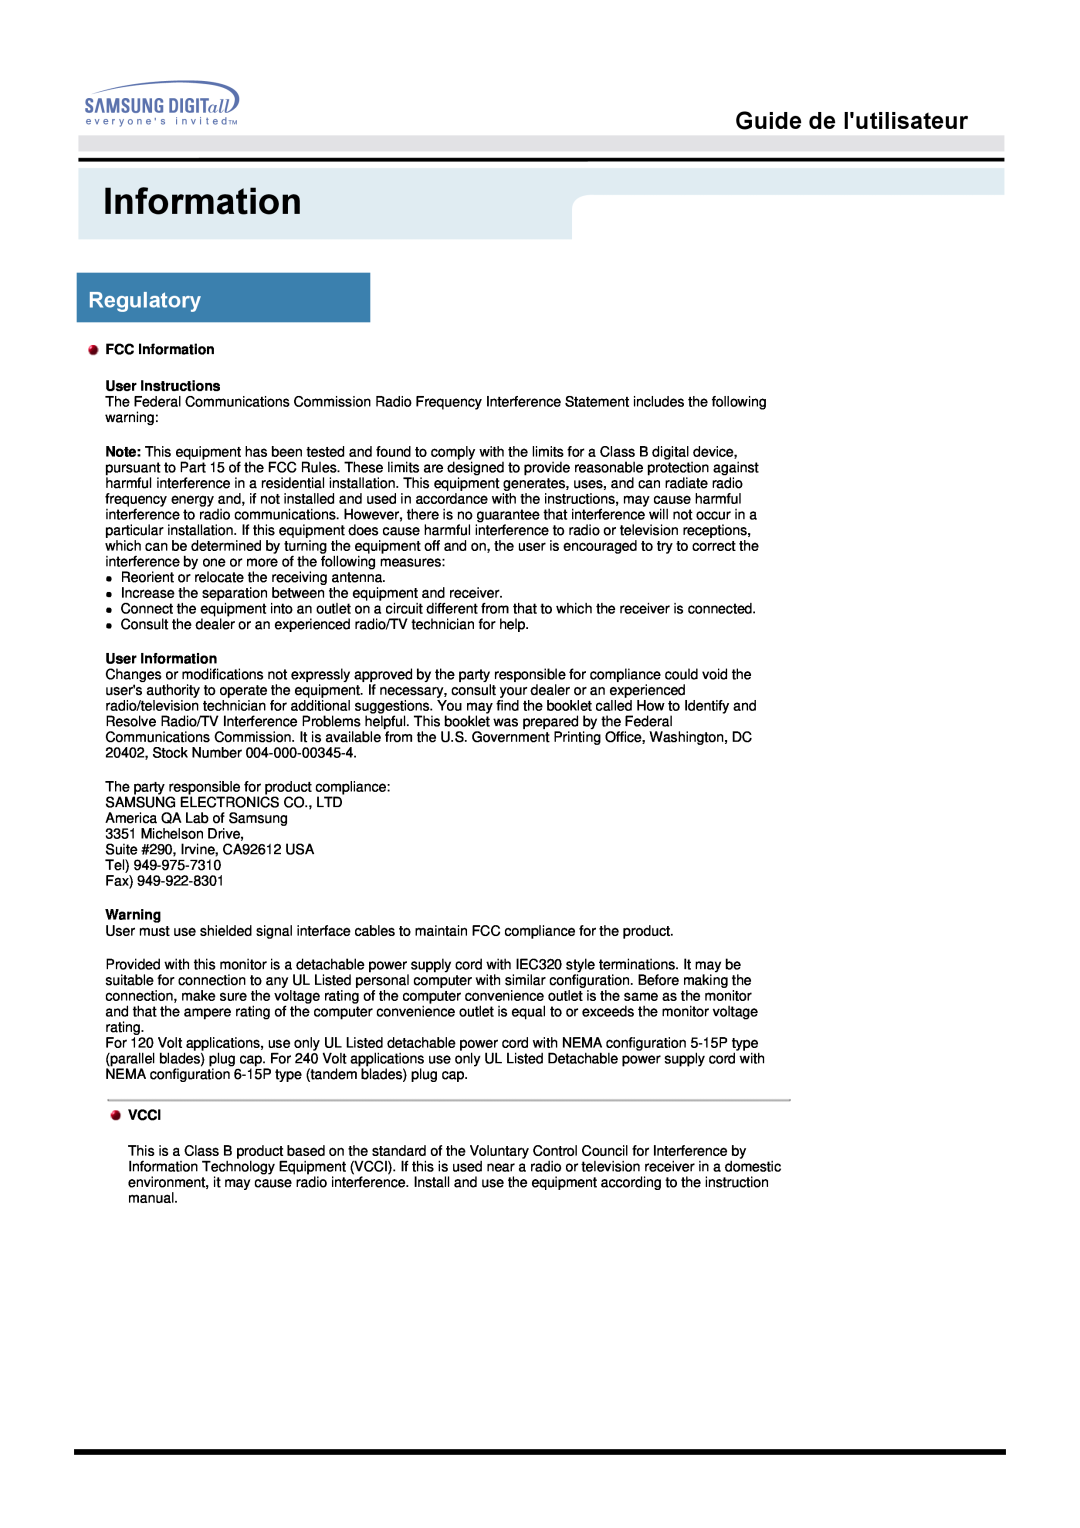 Samsung MO19PSZSV manual Regulatory, Guide de lutilisateur, FCC Information User Instructions, User Information, Vcci 